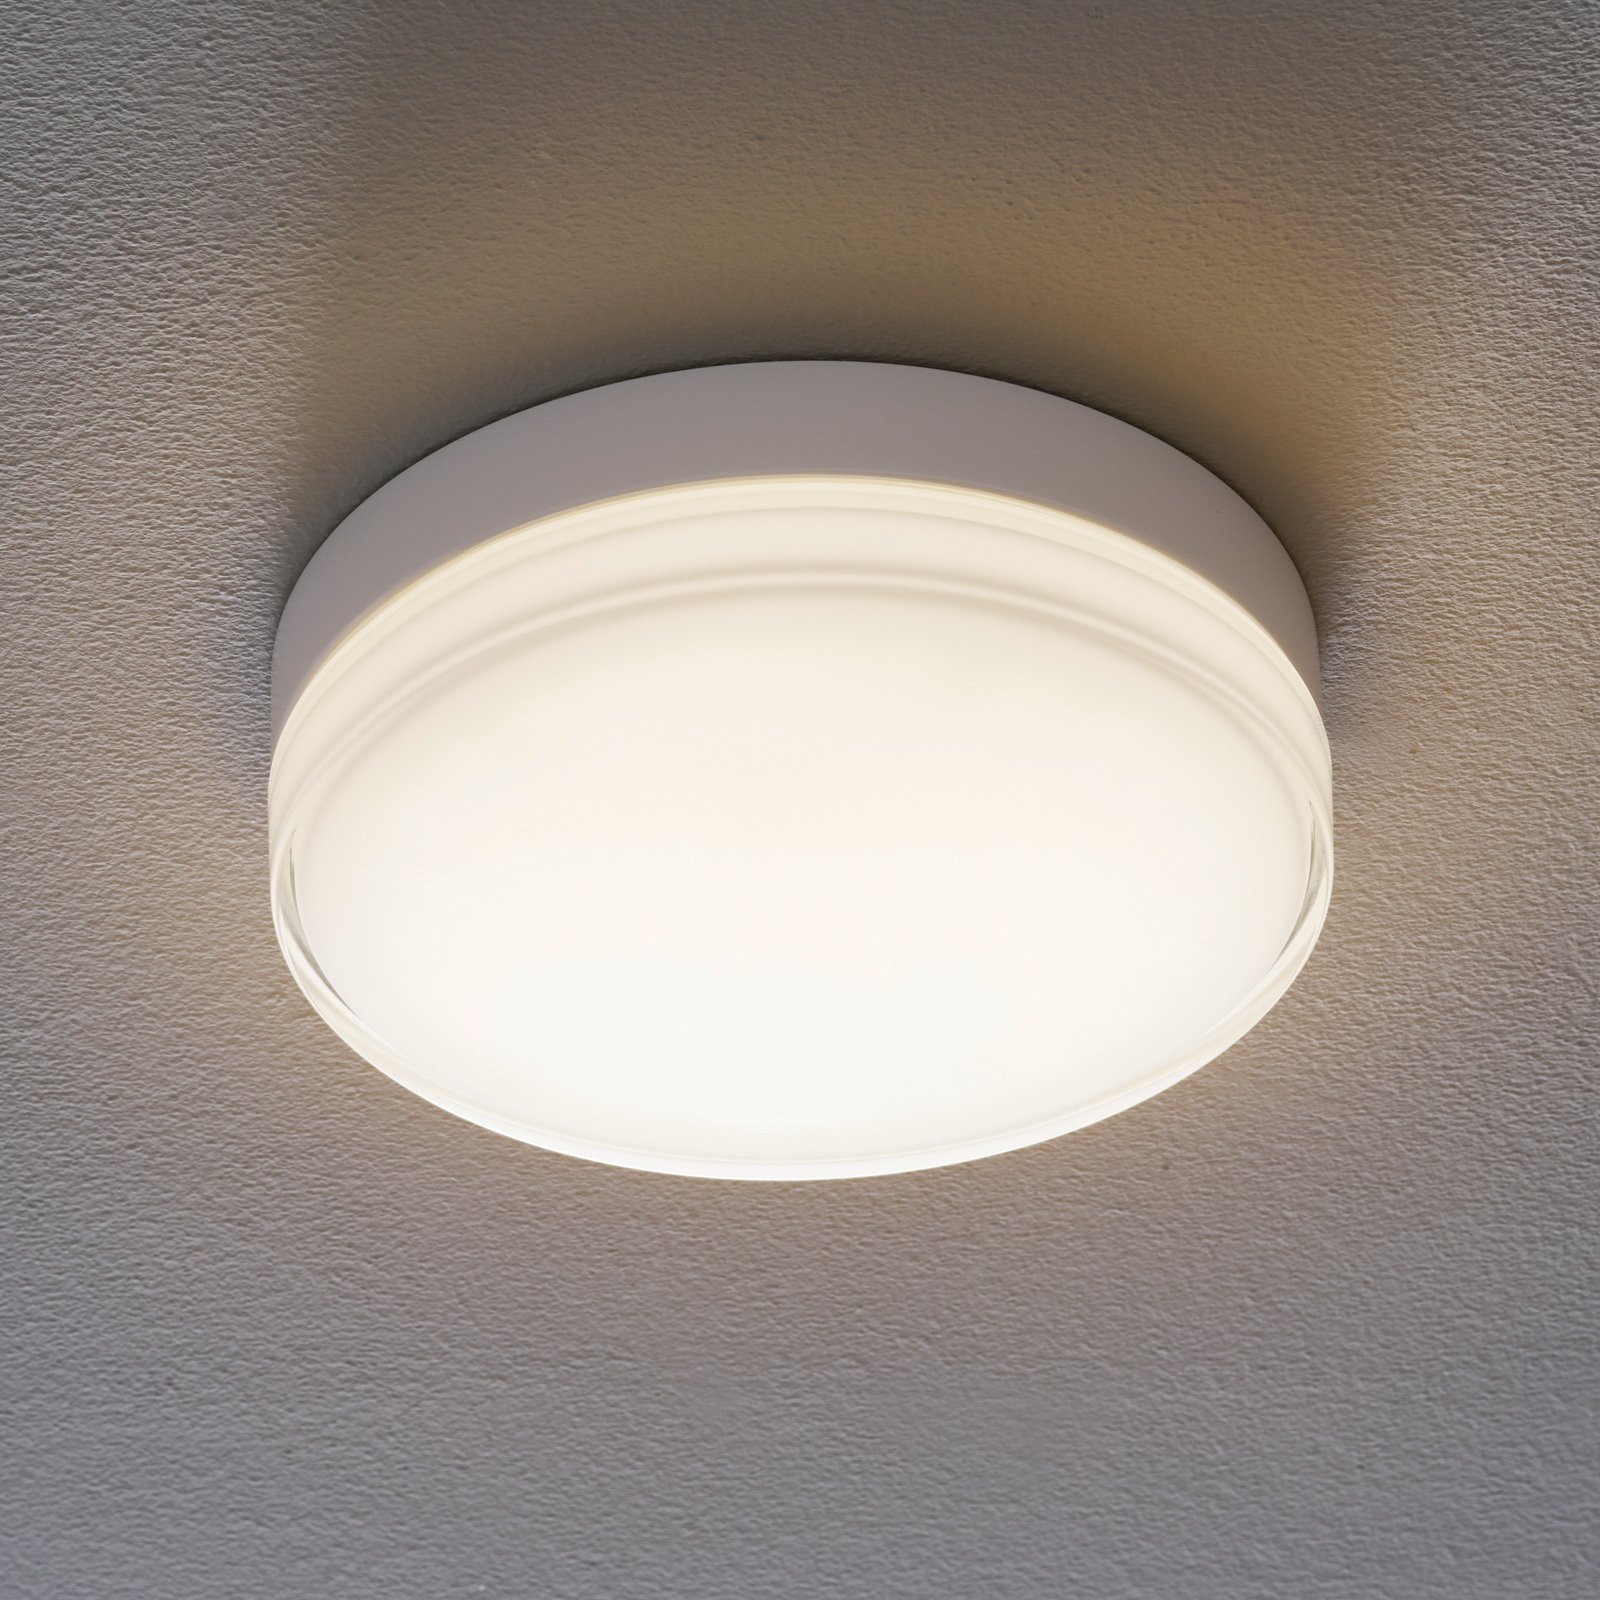 BEGA 12128 LED plafondlamp DALI 930 wit 26cm